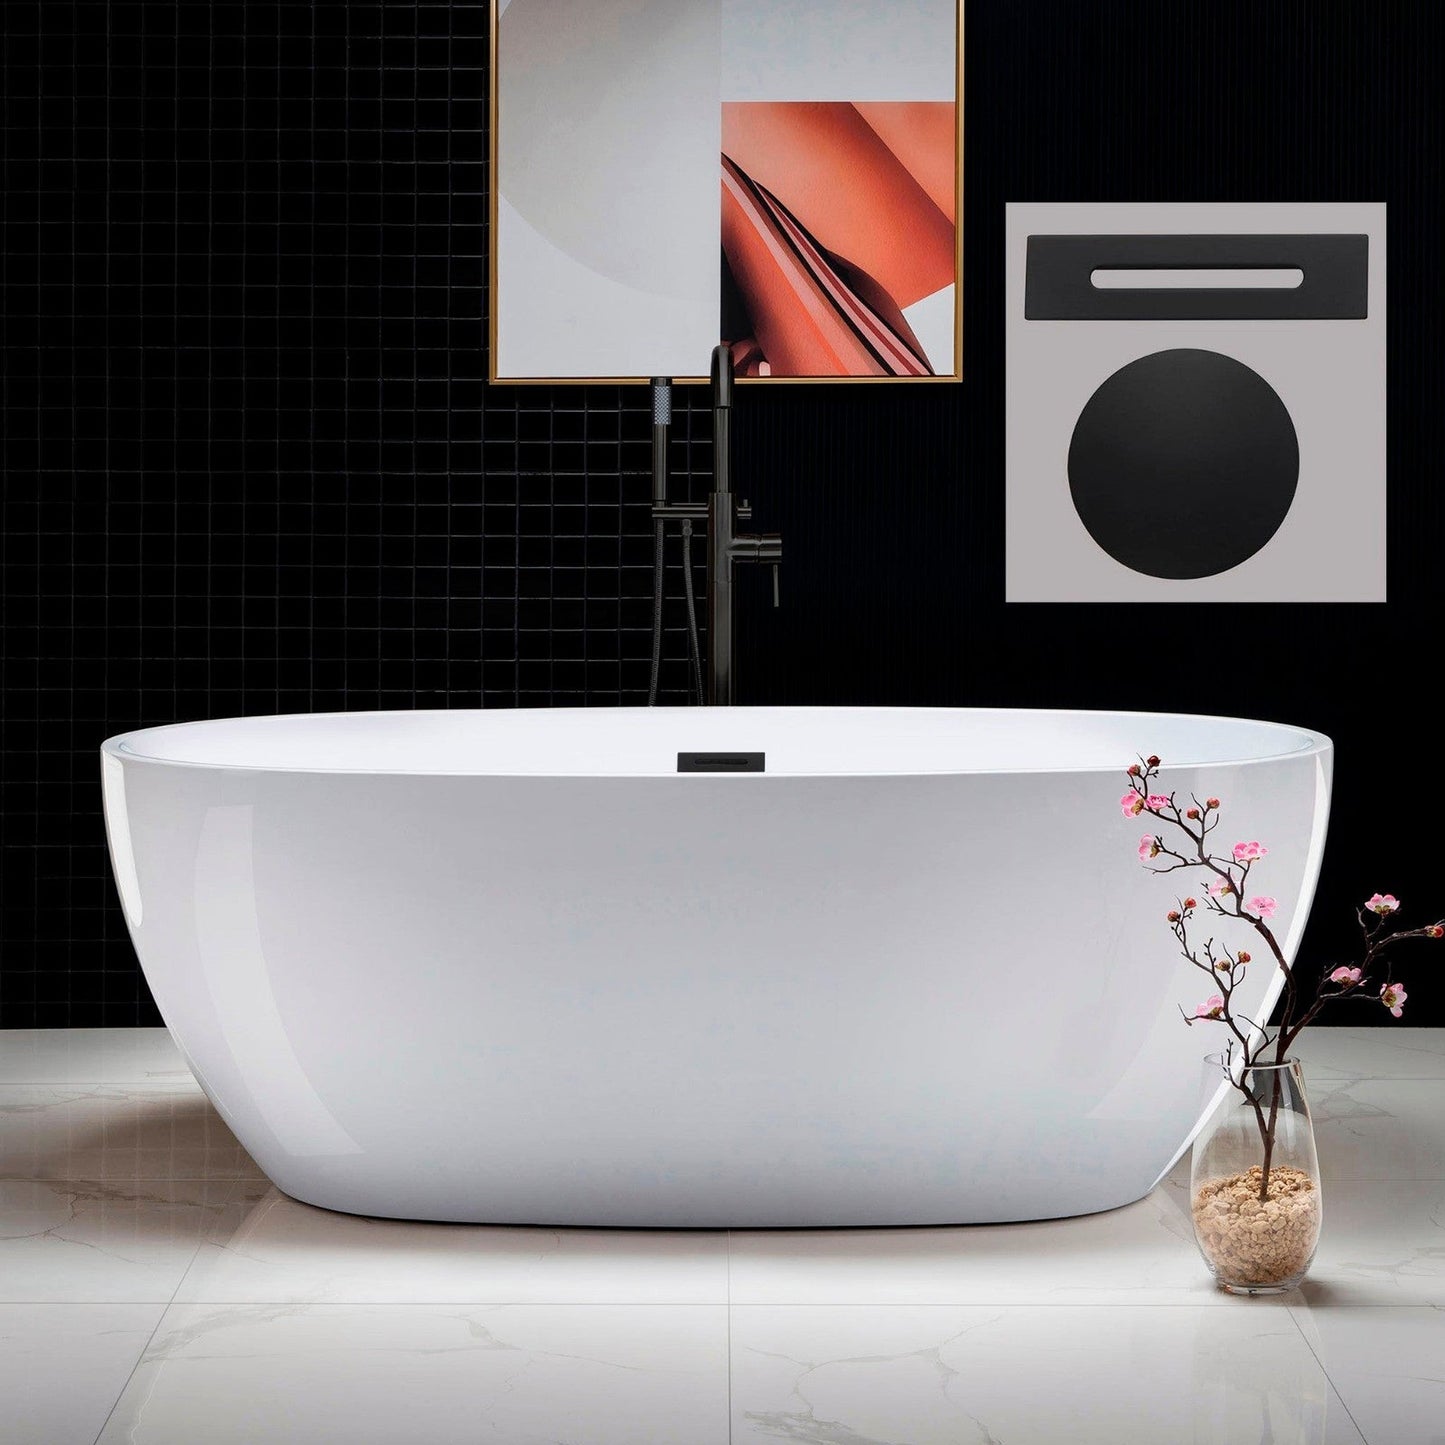 WoodBridge B0028 67" White Acrylic Freestanding Soaking Bathtub With Matte Black Drain, Overflow, F0072MBVT Tub Filler and Caddy Tray